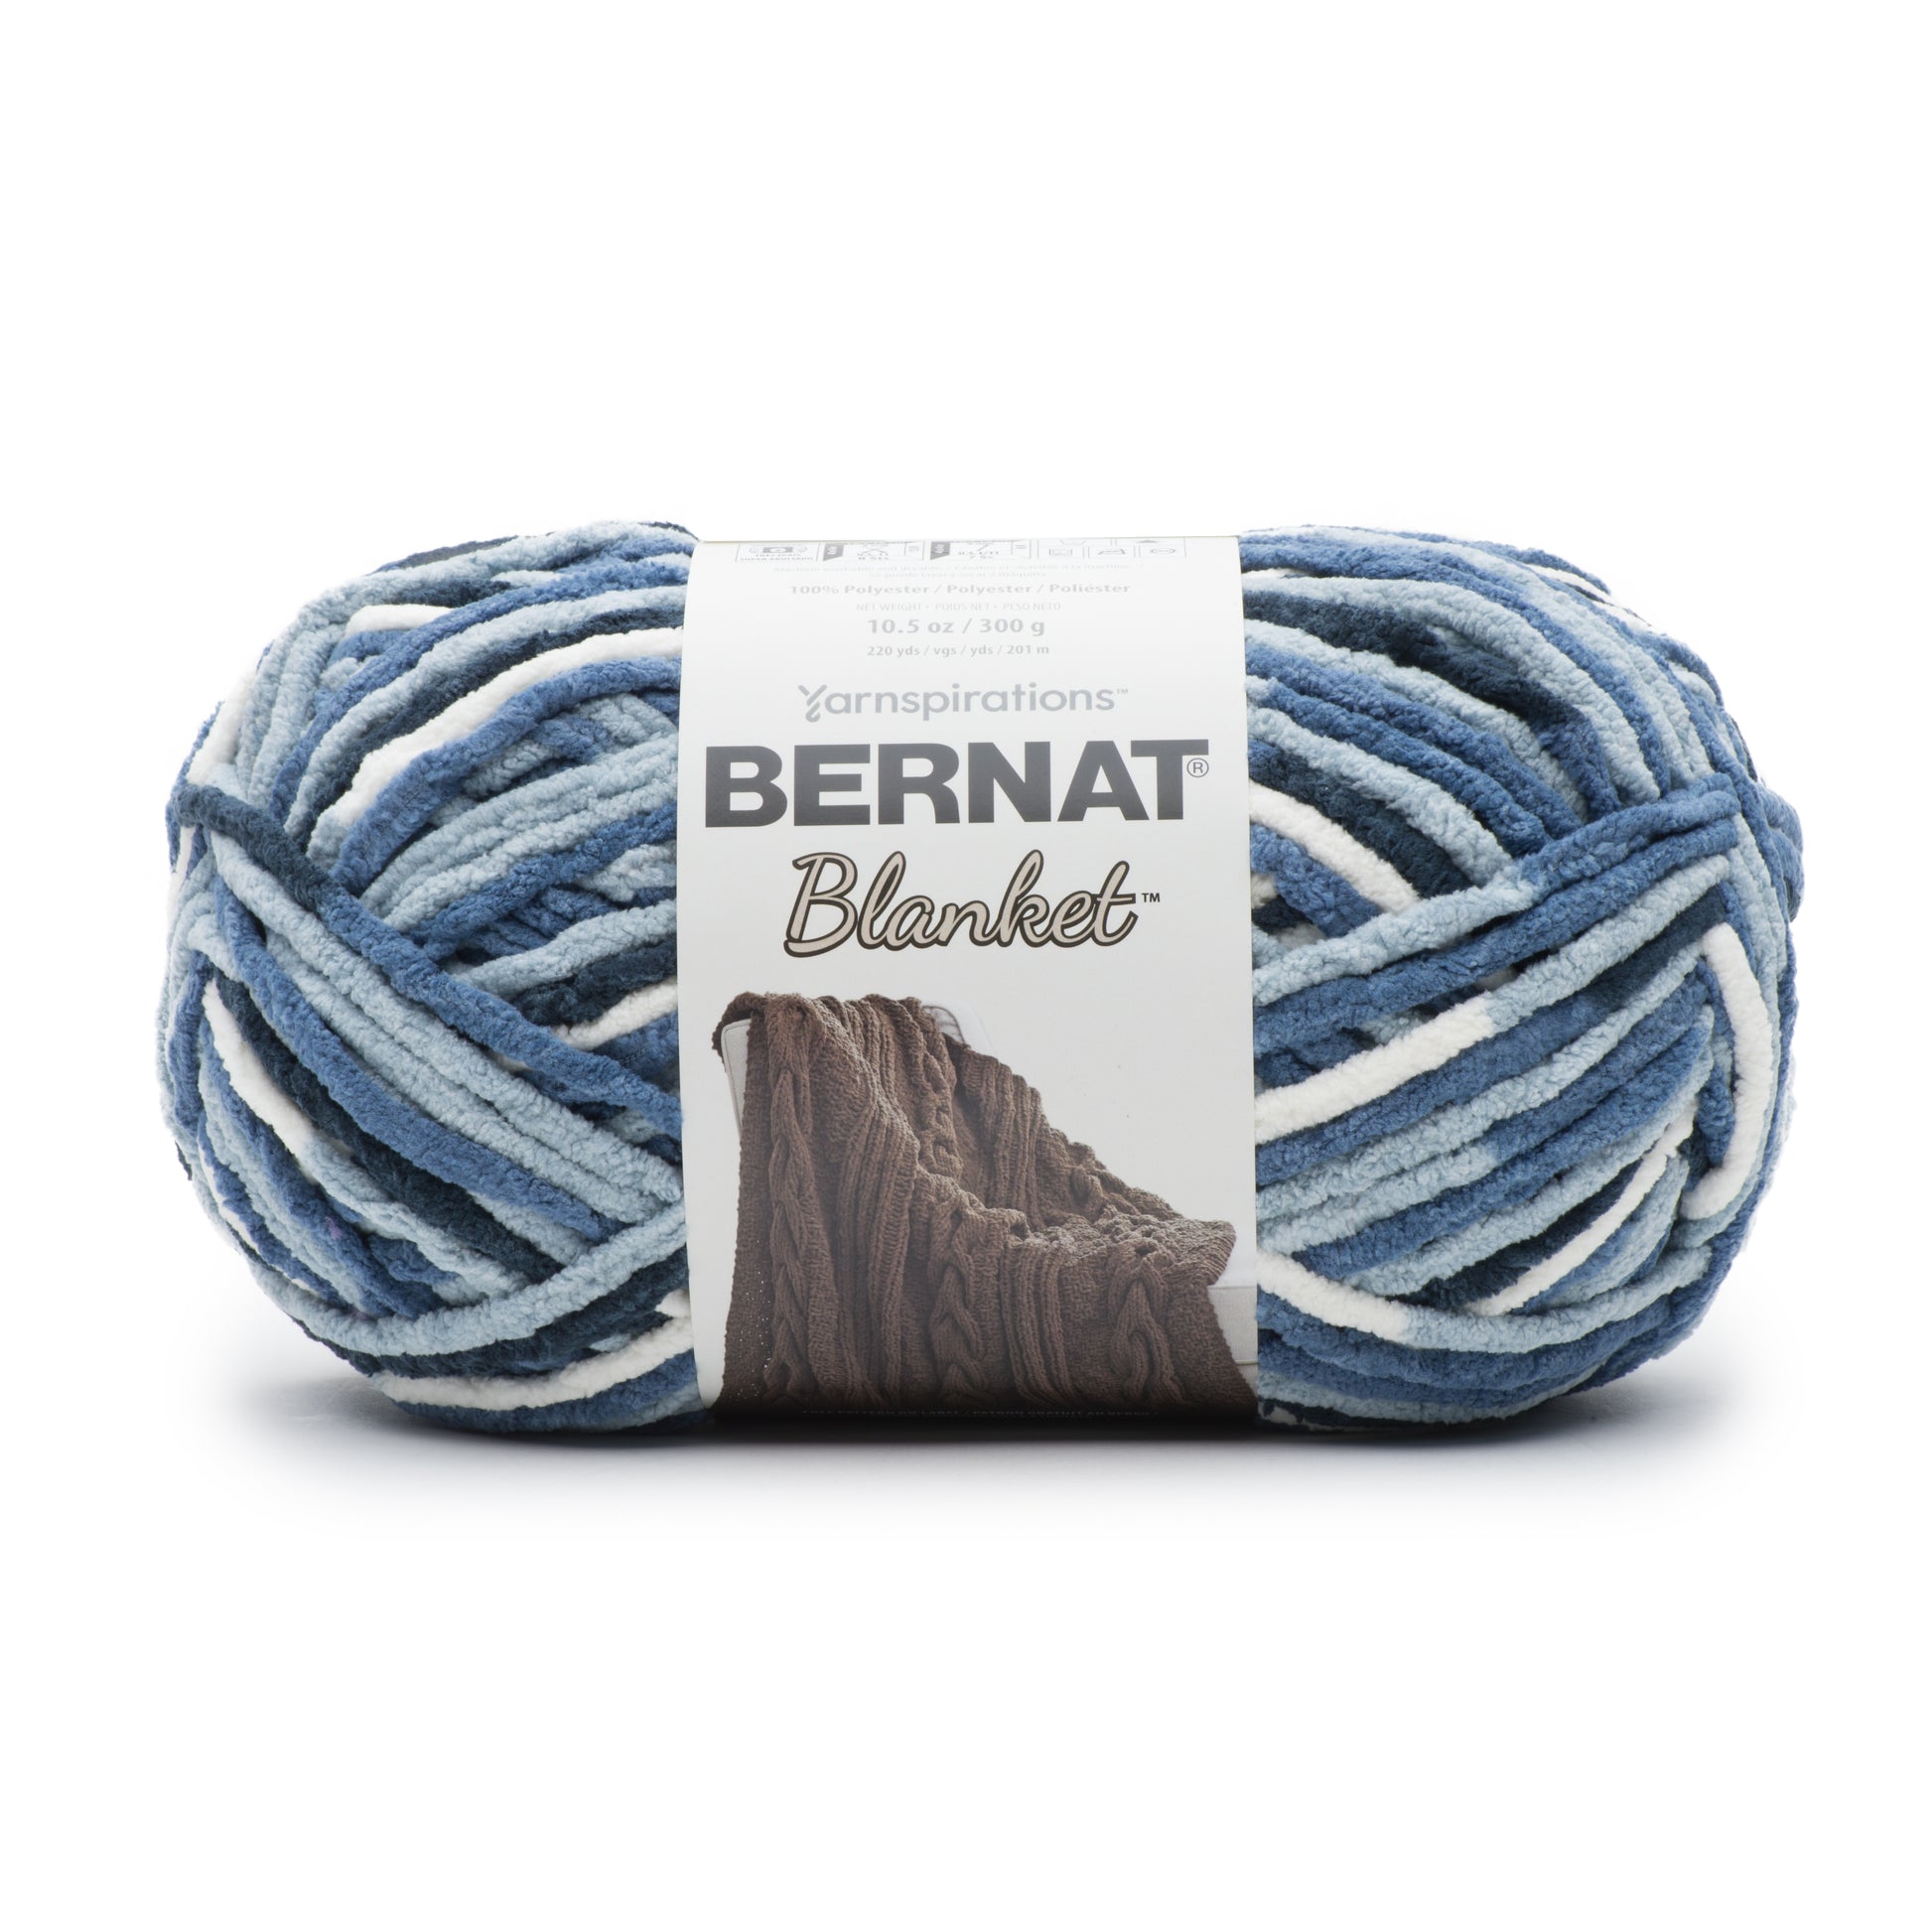 Bernat Blanket Brights RASPBERRY RIBBON VARG 12014220 Yds 10.5 Oz bernat  Blanket Yarn Pink Varigated Yarn Chenille Knit Crochet -  Israel